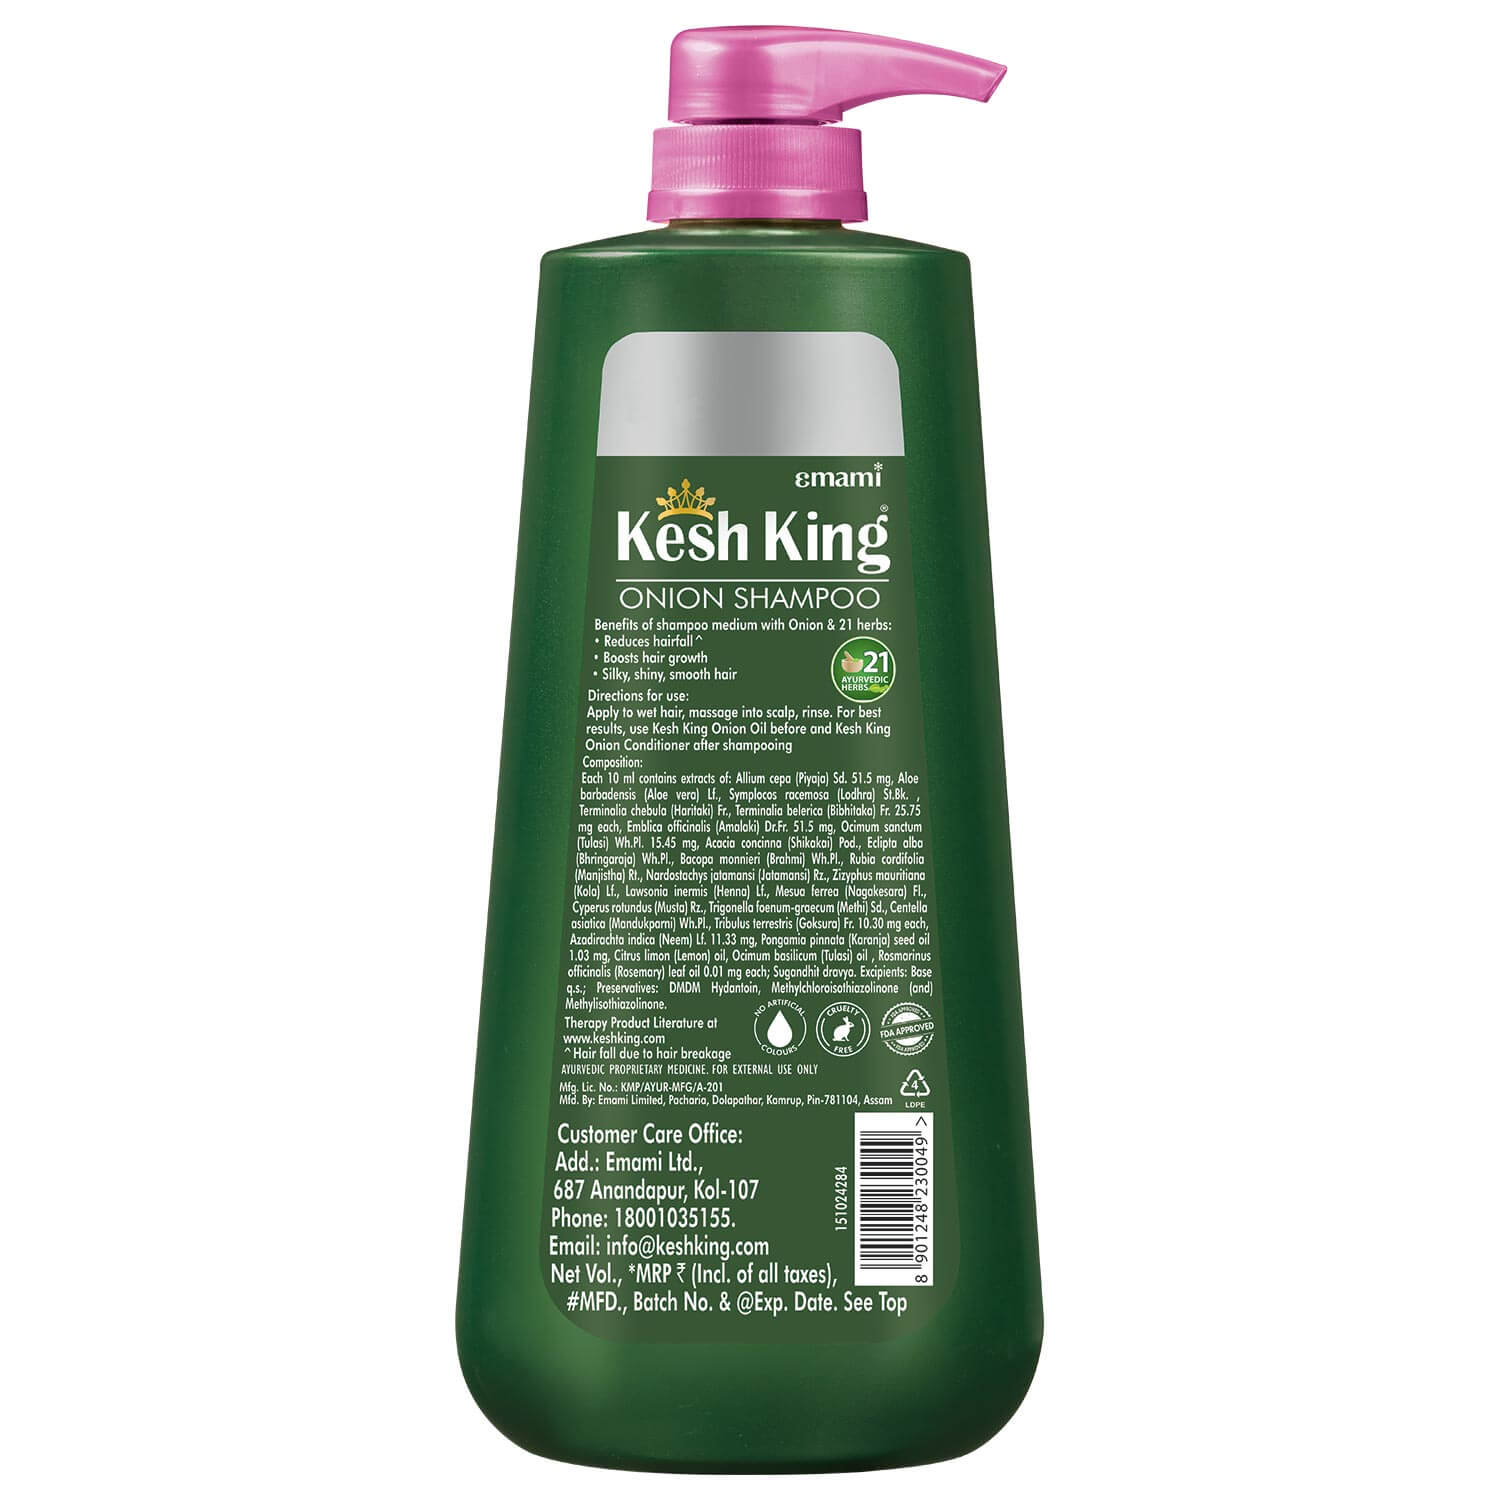 Kesh King Organic Onion Shampoo With Curry Leaves - 600ml